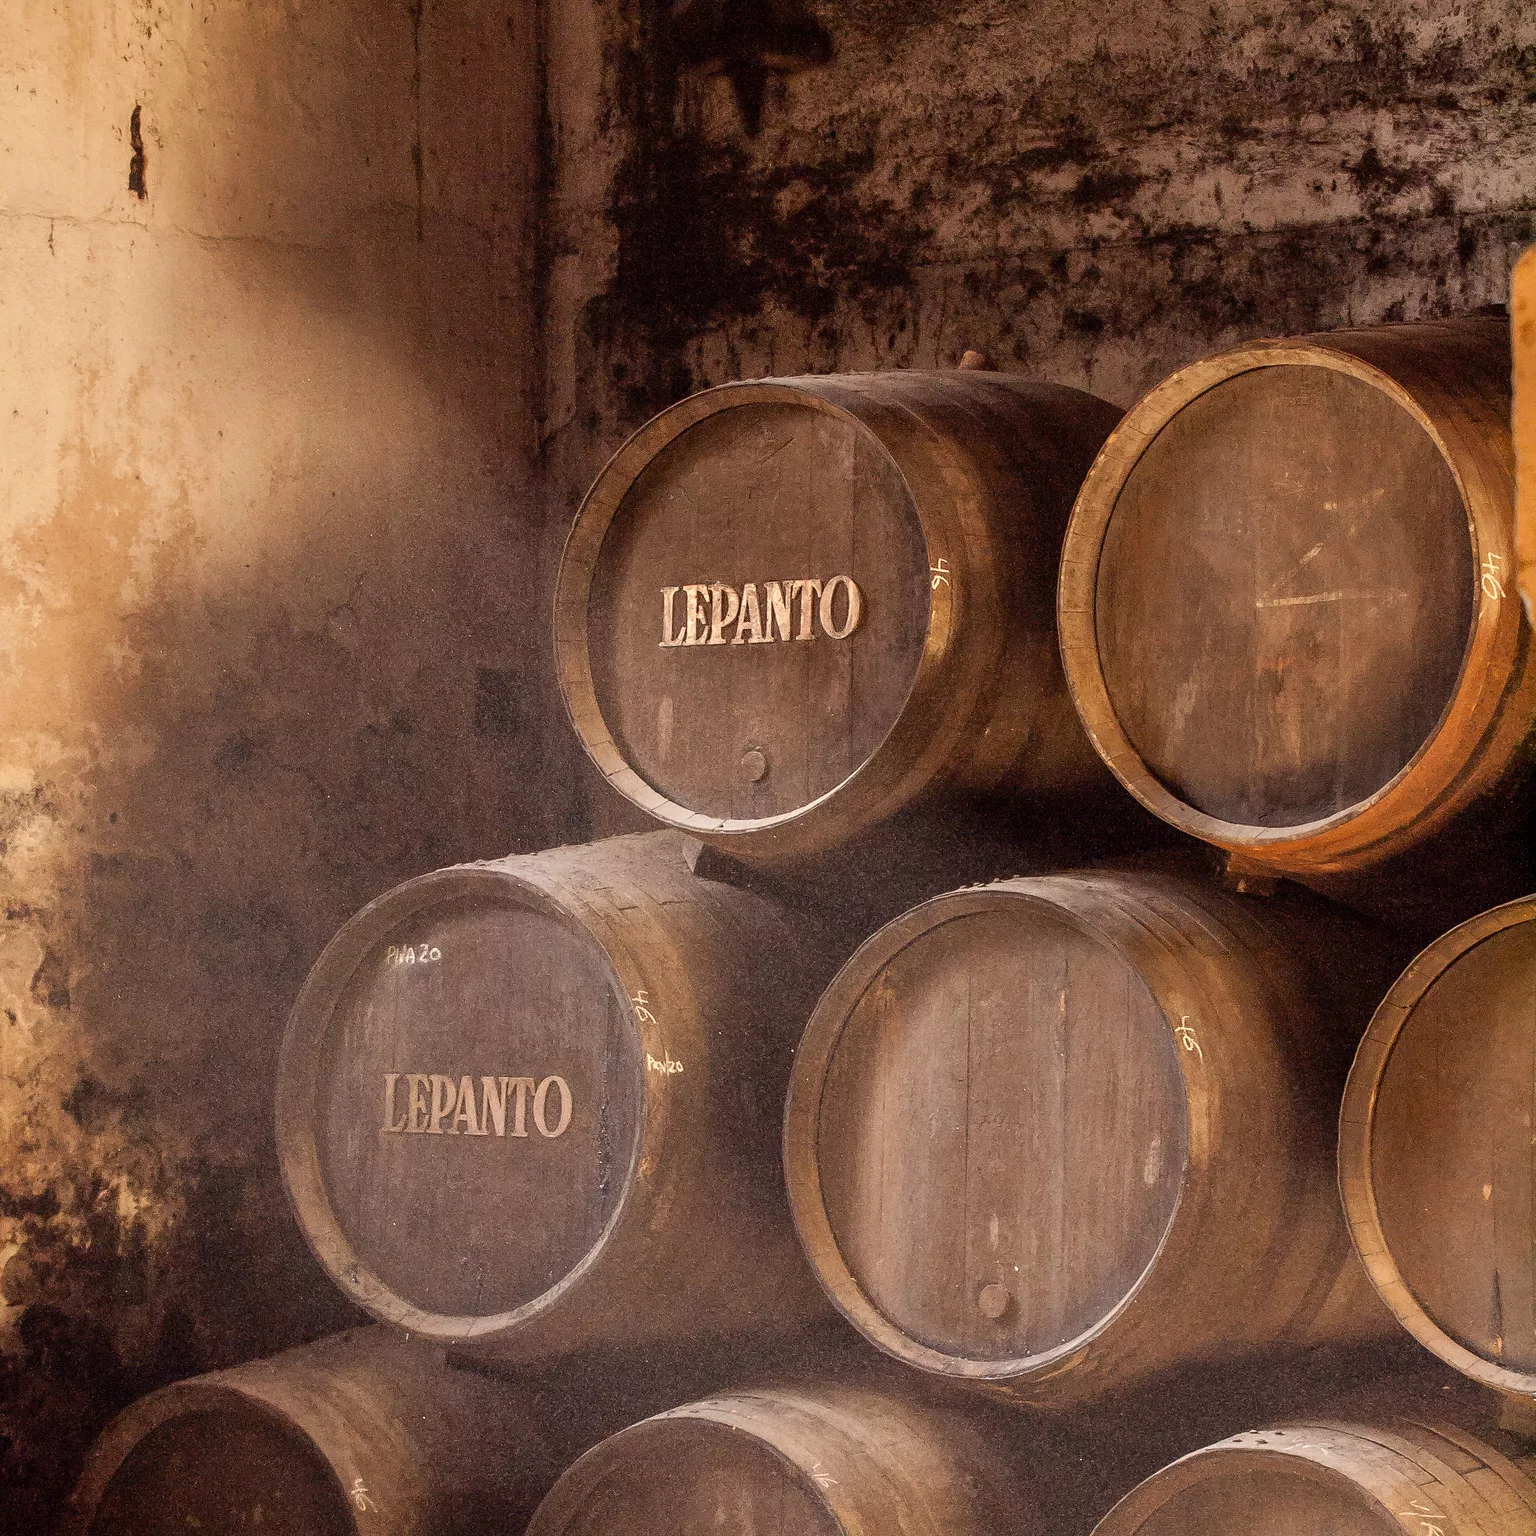 Sherry Wines of Jerez